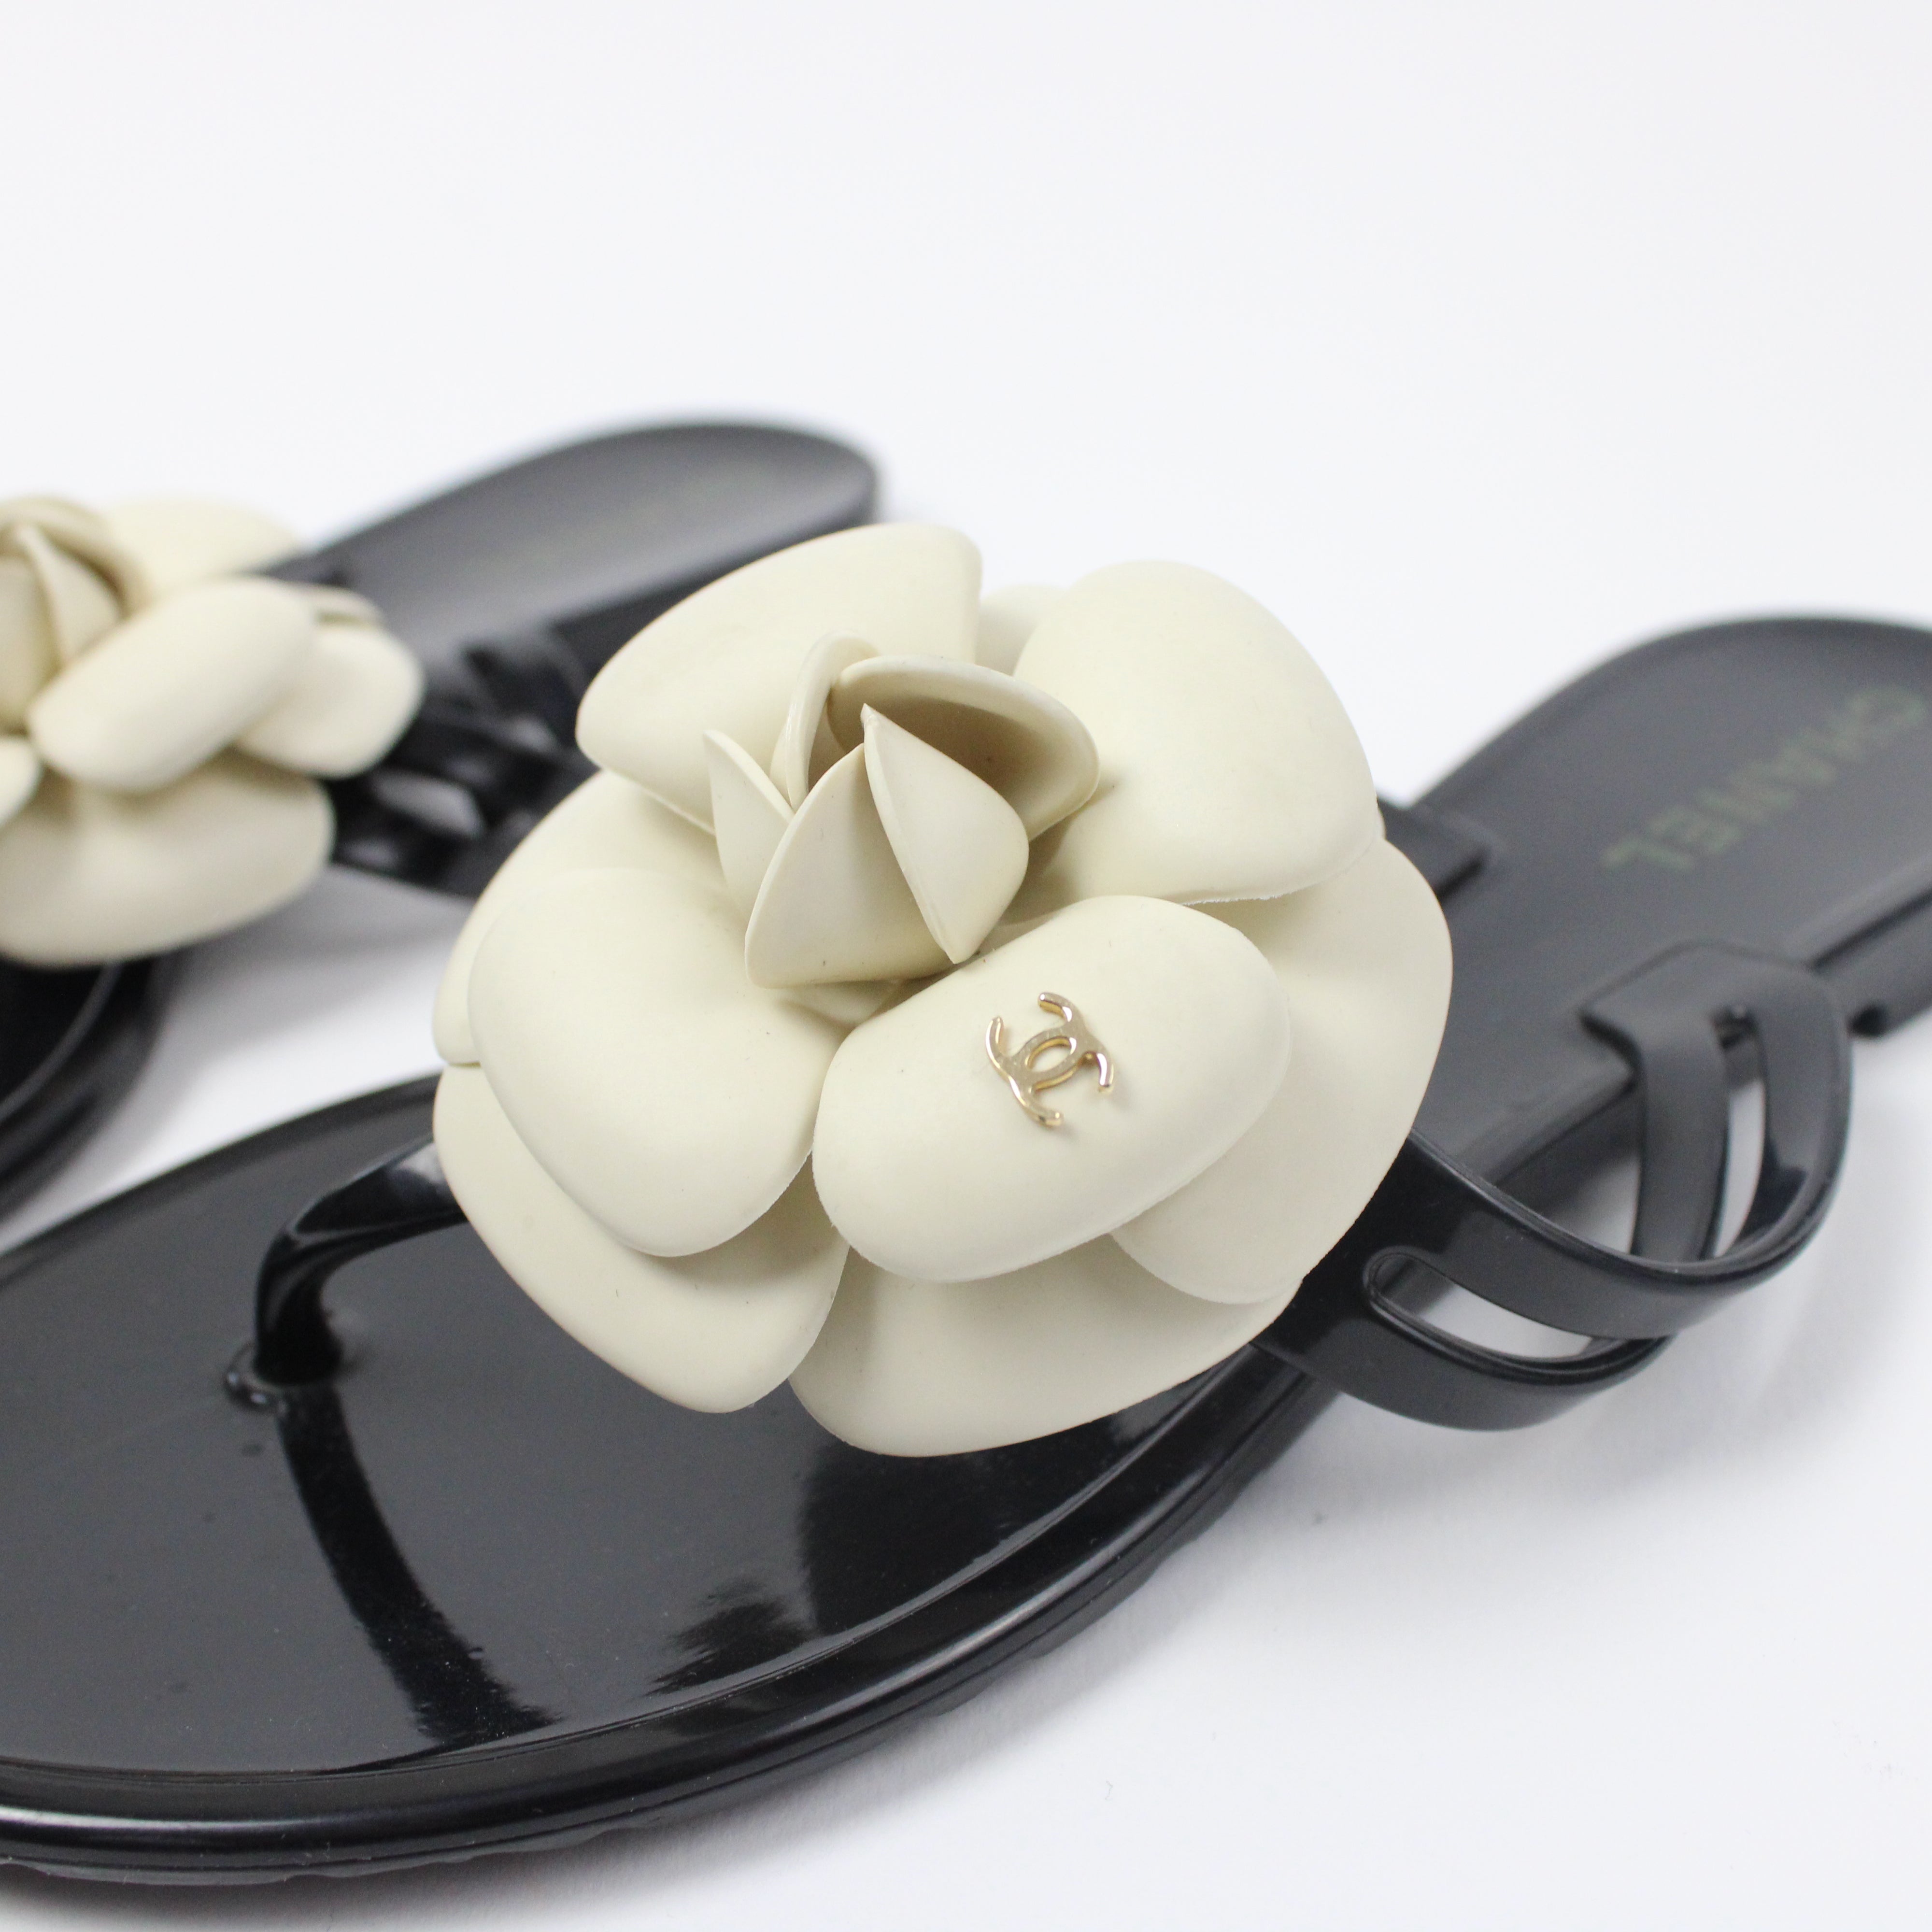 Chanel Women's Flower Sandals Size 36